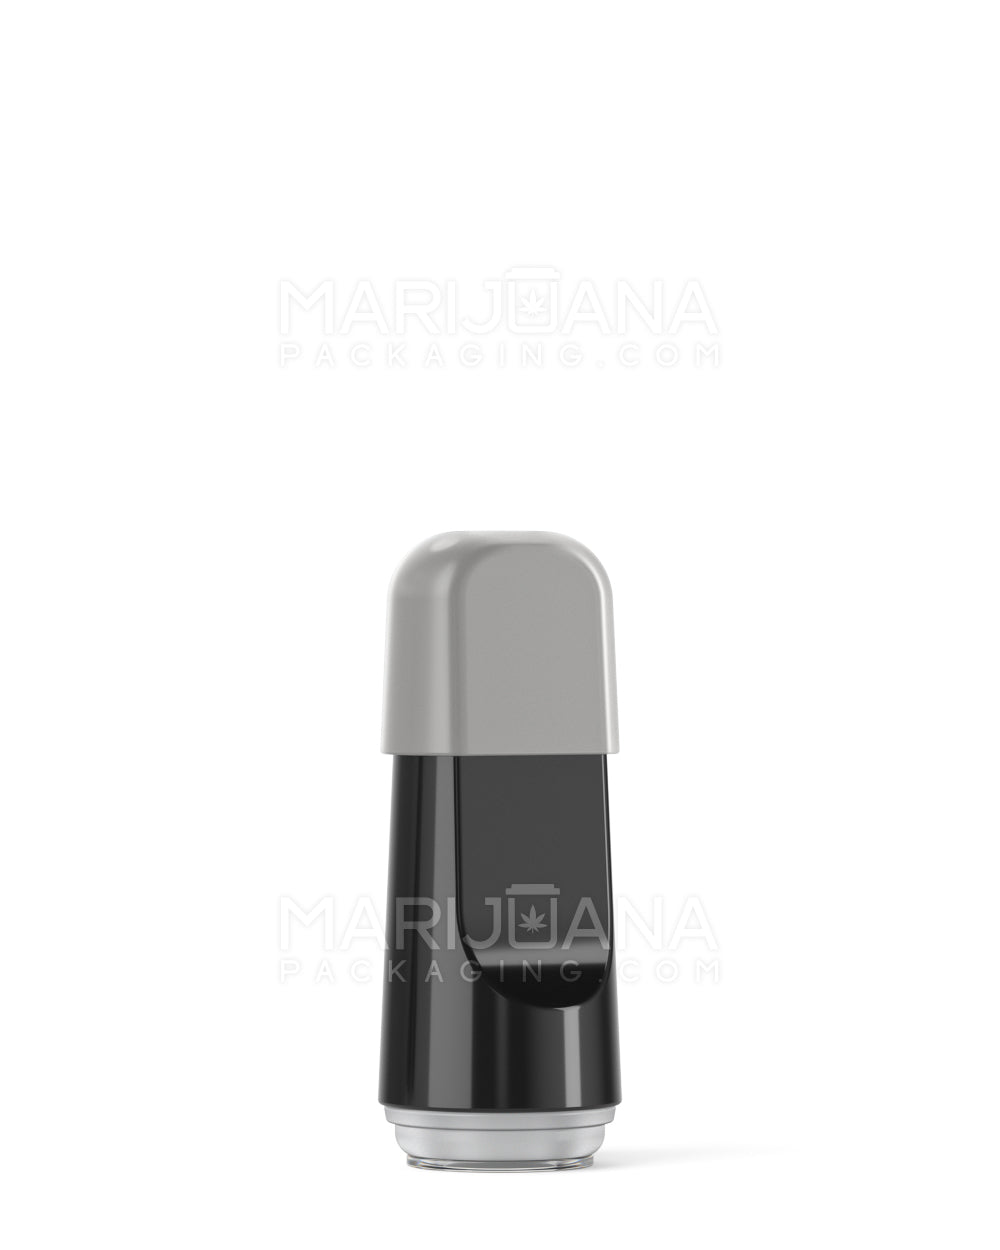 RAE | Flat Vape Mouthpiece for Hand Press Plastic Cartridges | Black Plastic - Hand Press - 400 Count - 7